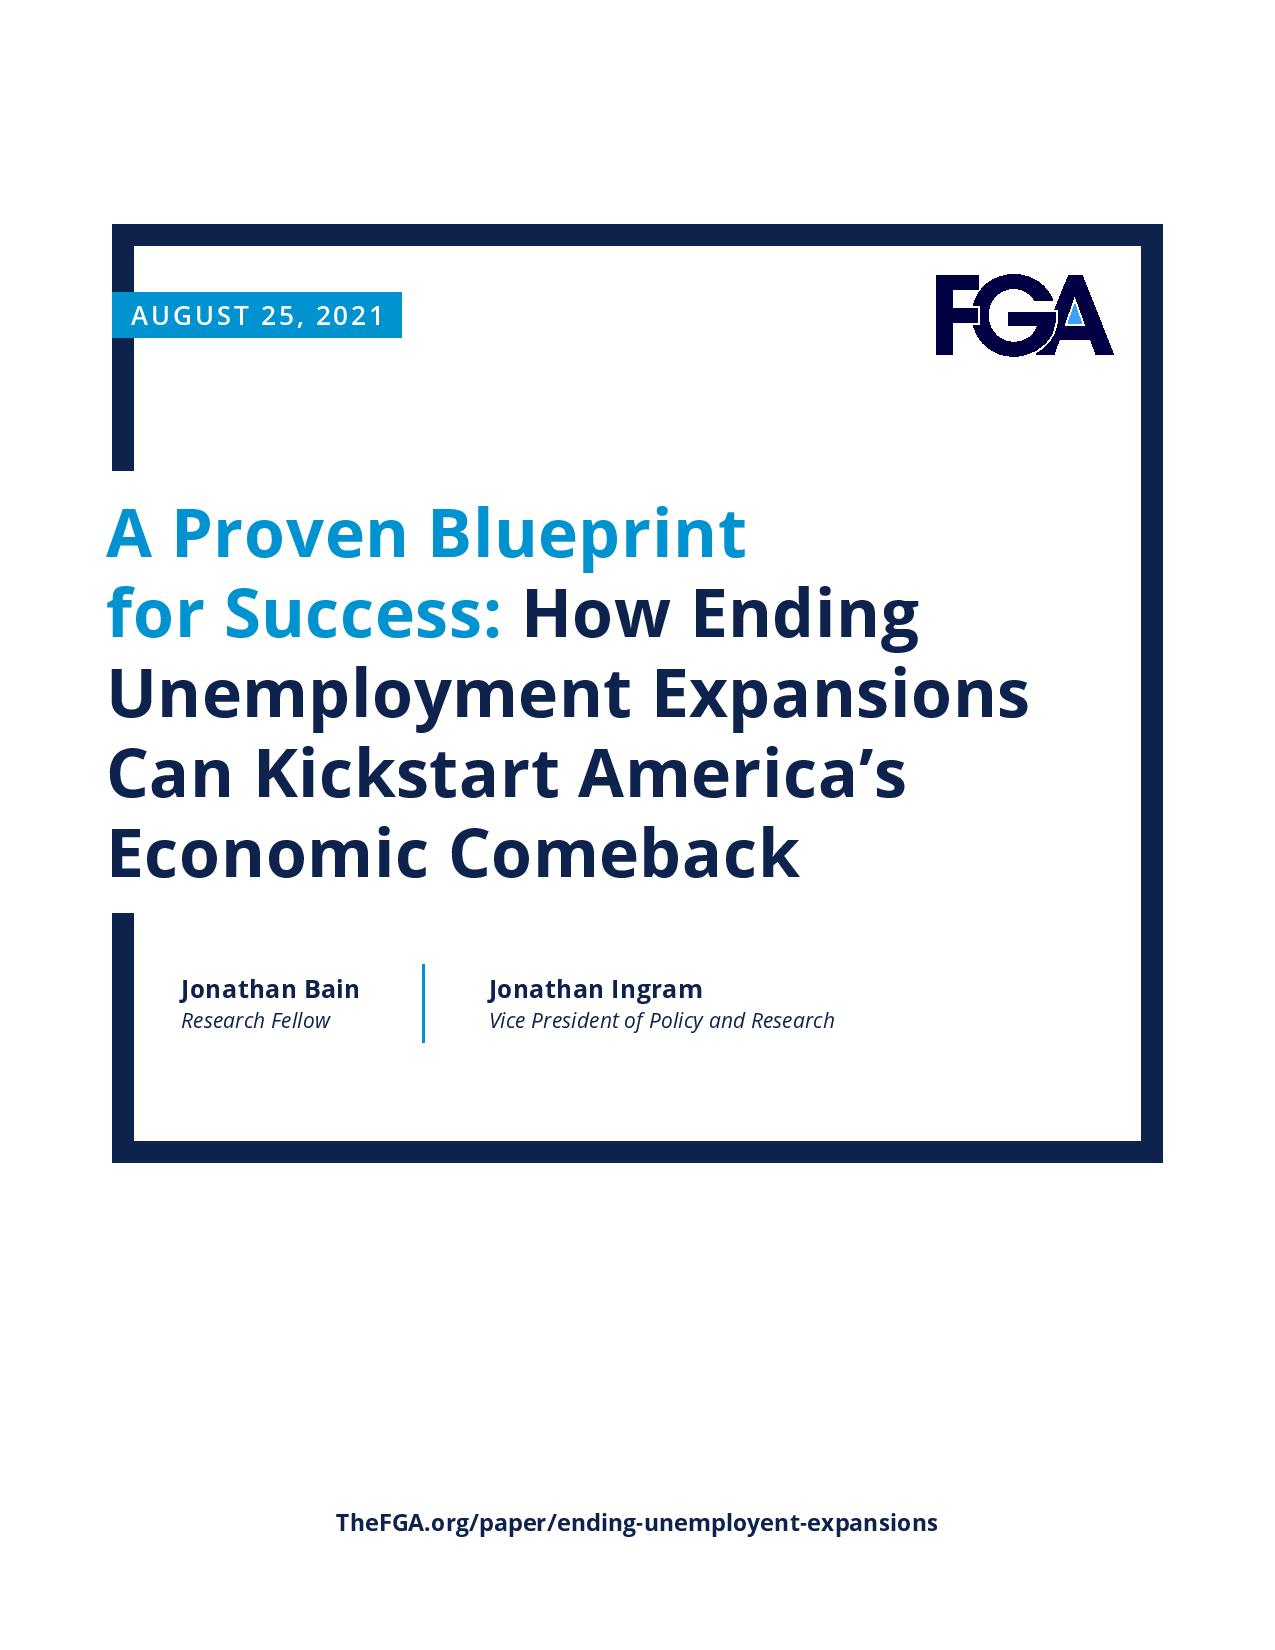 A Proven Blueprint for Success: How Ending Unemployment Expansions Can Kickstart America’s Economic Comeback